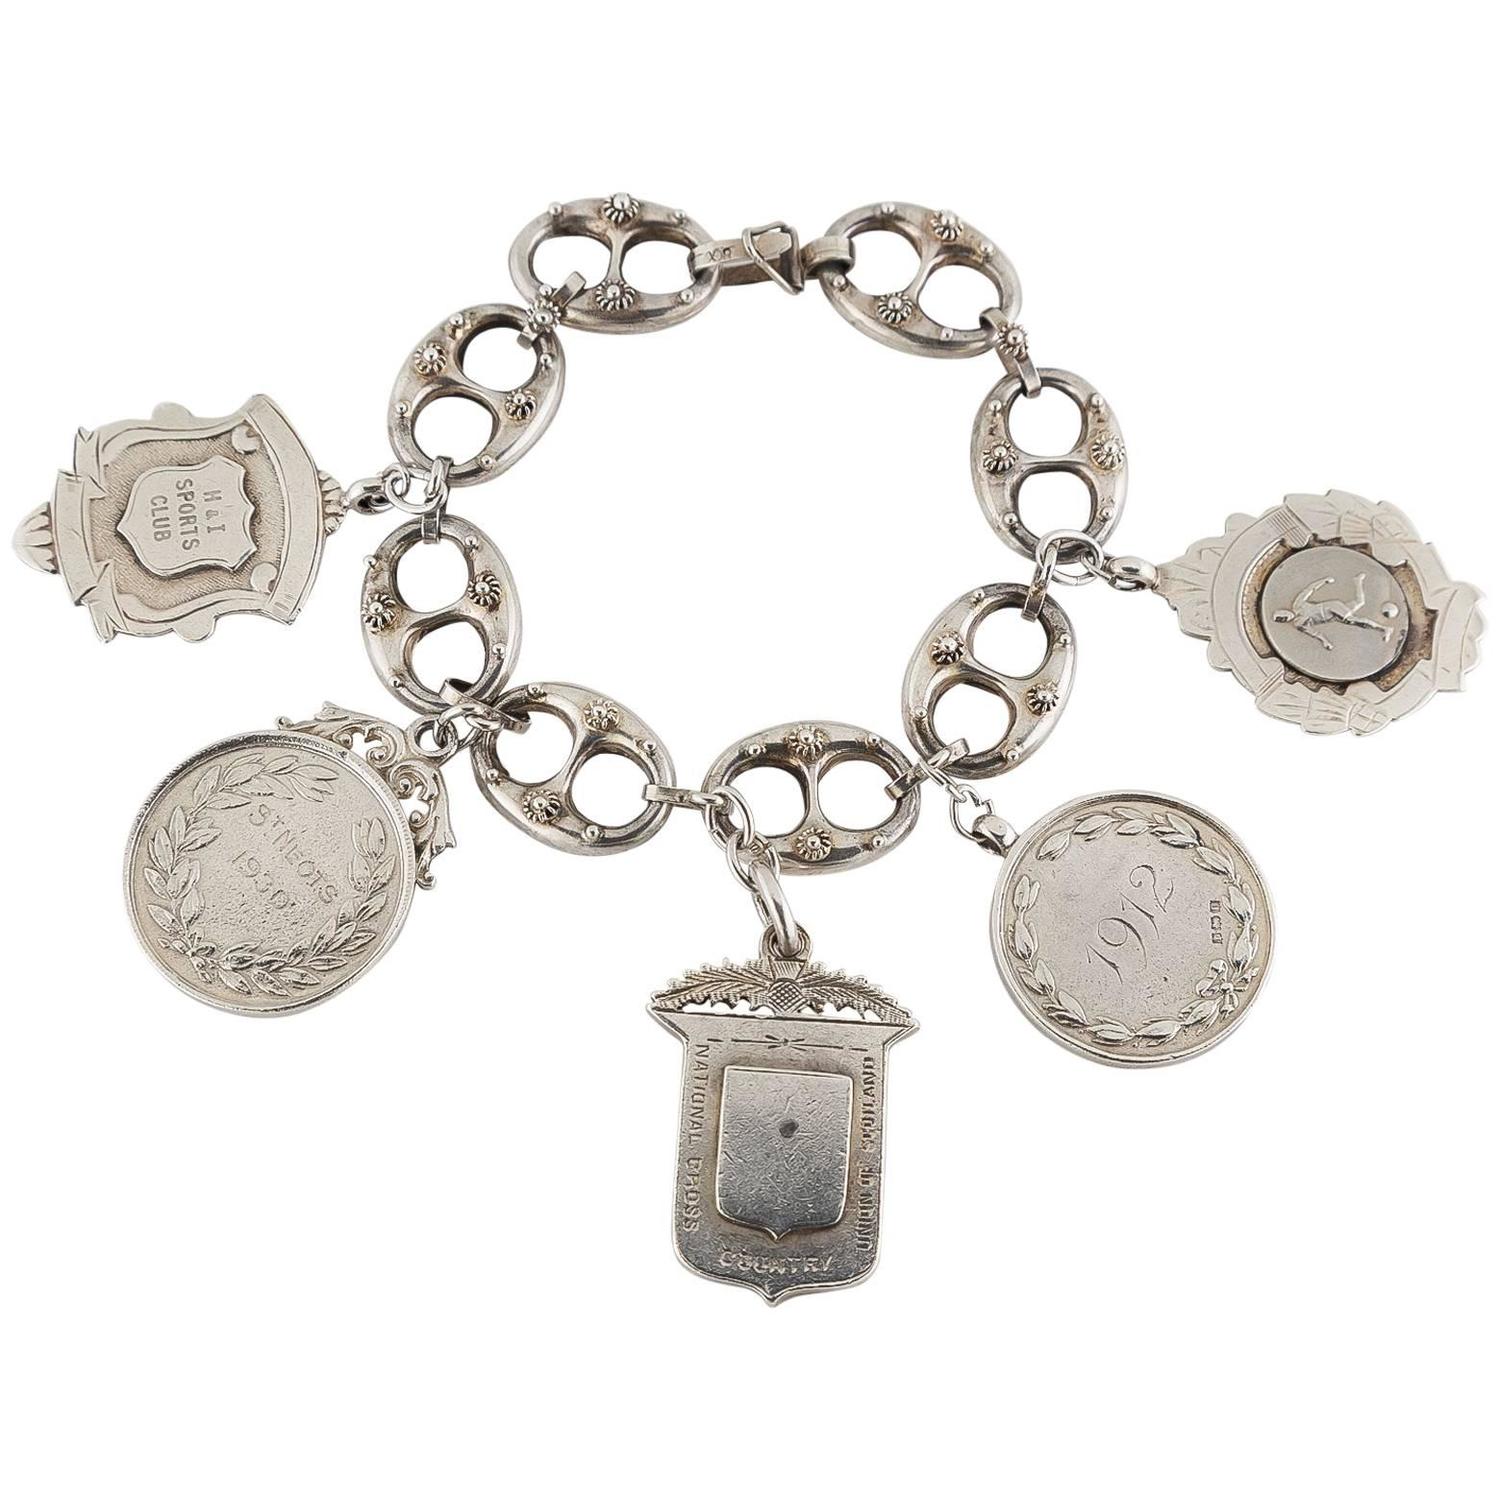 Victorian Sterling Silver Charm Bracelet For Sale at 1stdibs